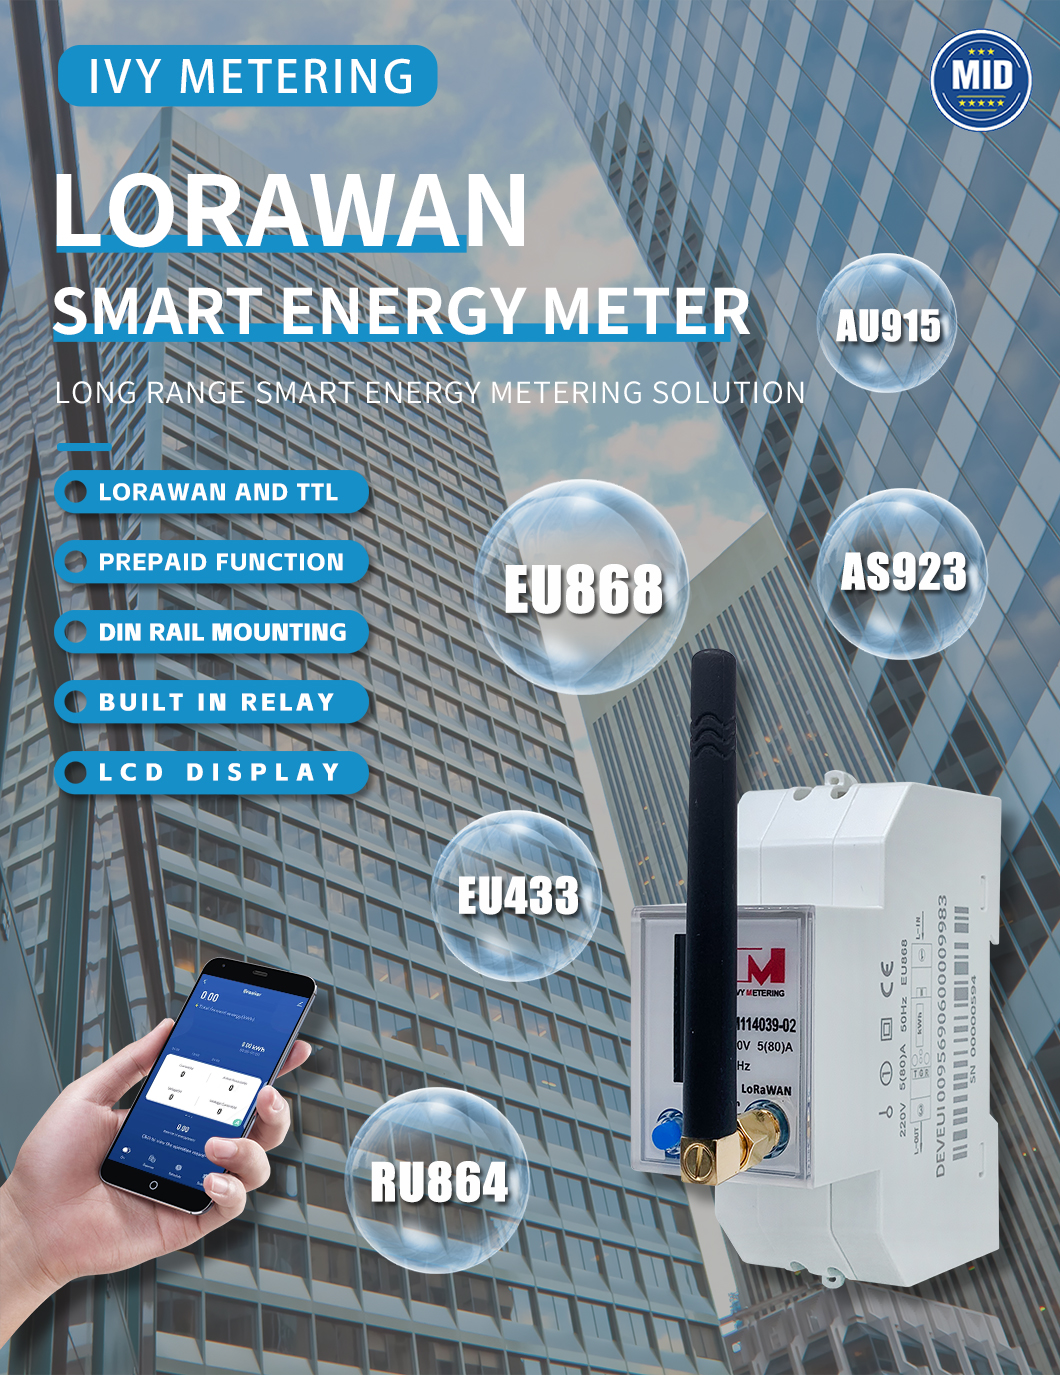 EM114039-02 LoRaWAN Energy Meter LCD Display Smart Energy Meter IoT Din Rail LoRaWAN Energy Meter Smart Single Phase EU868MHz